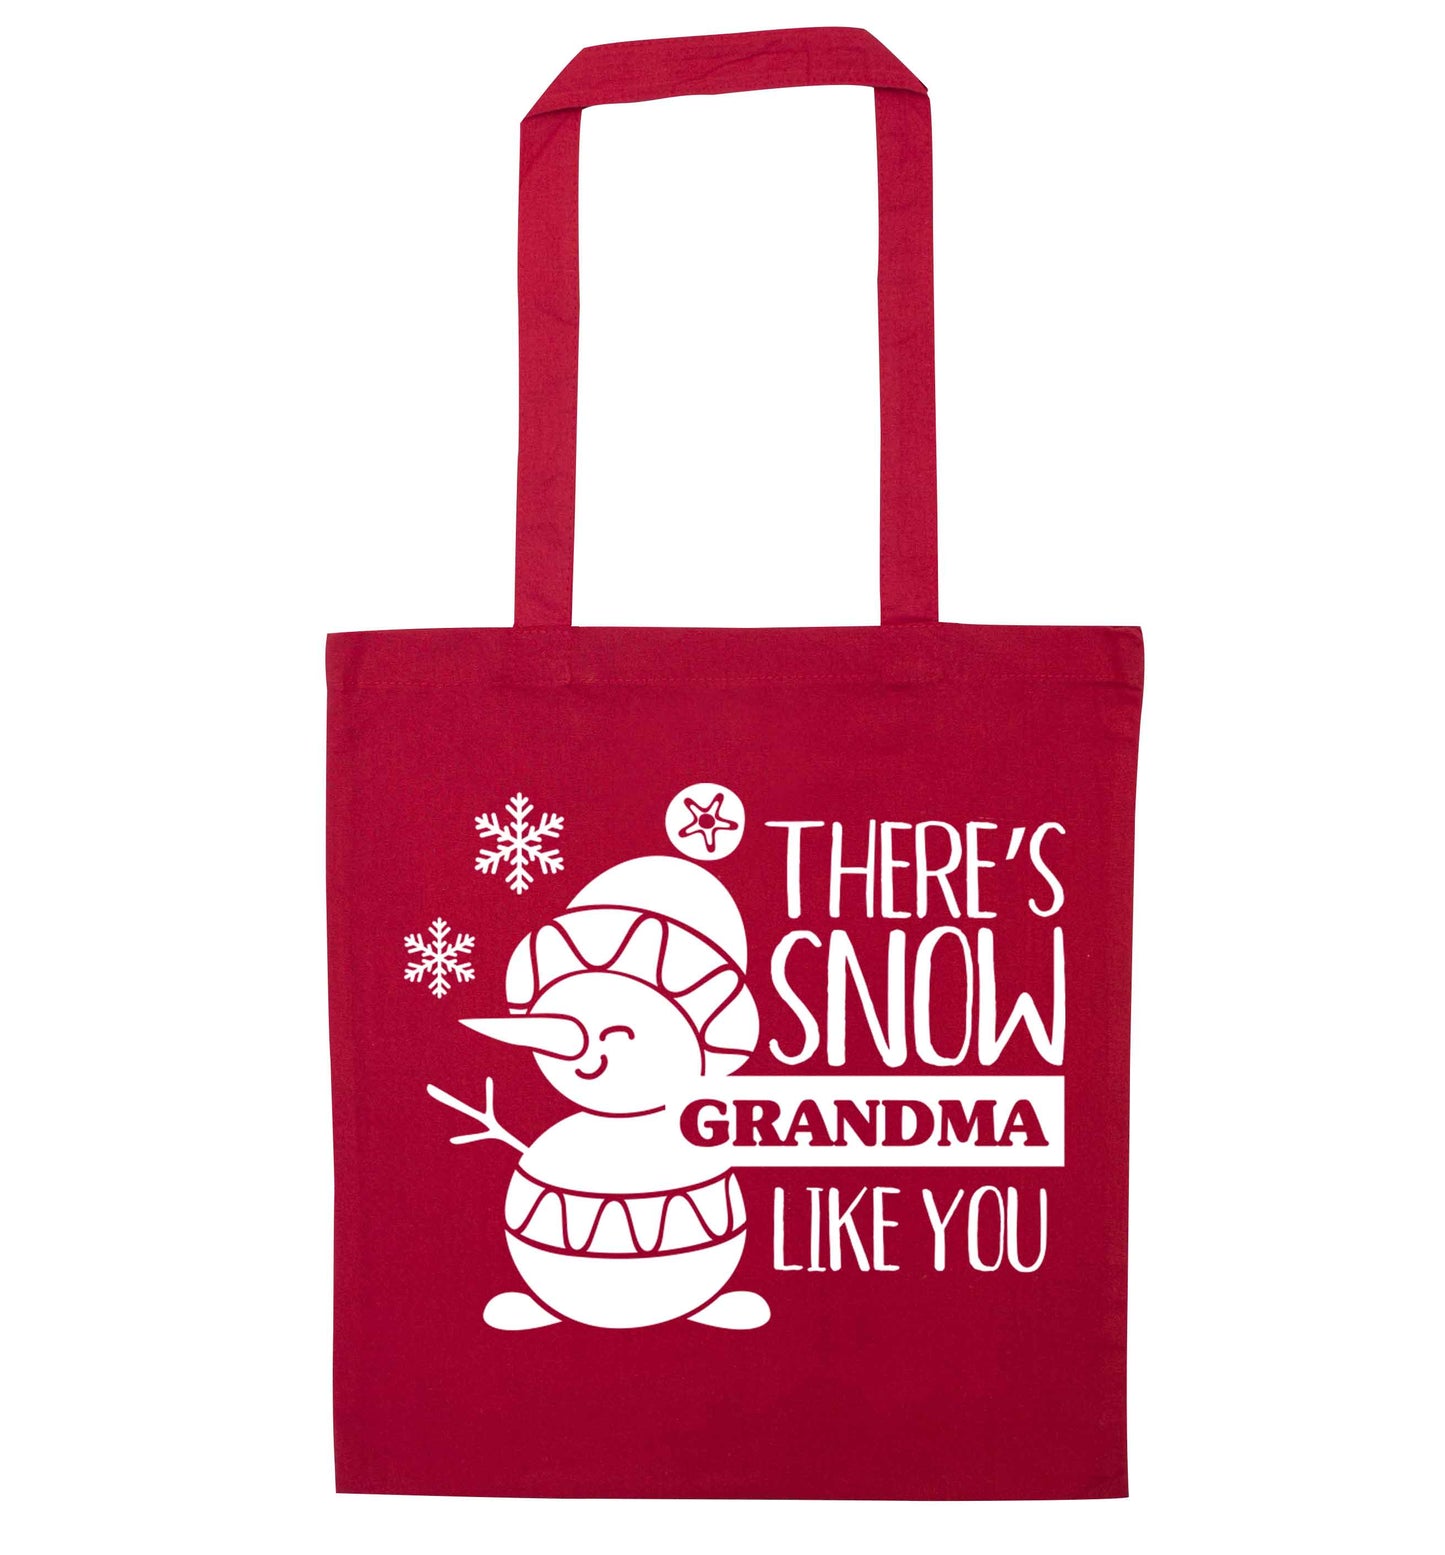 There's snow grandma like you red tote bag